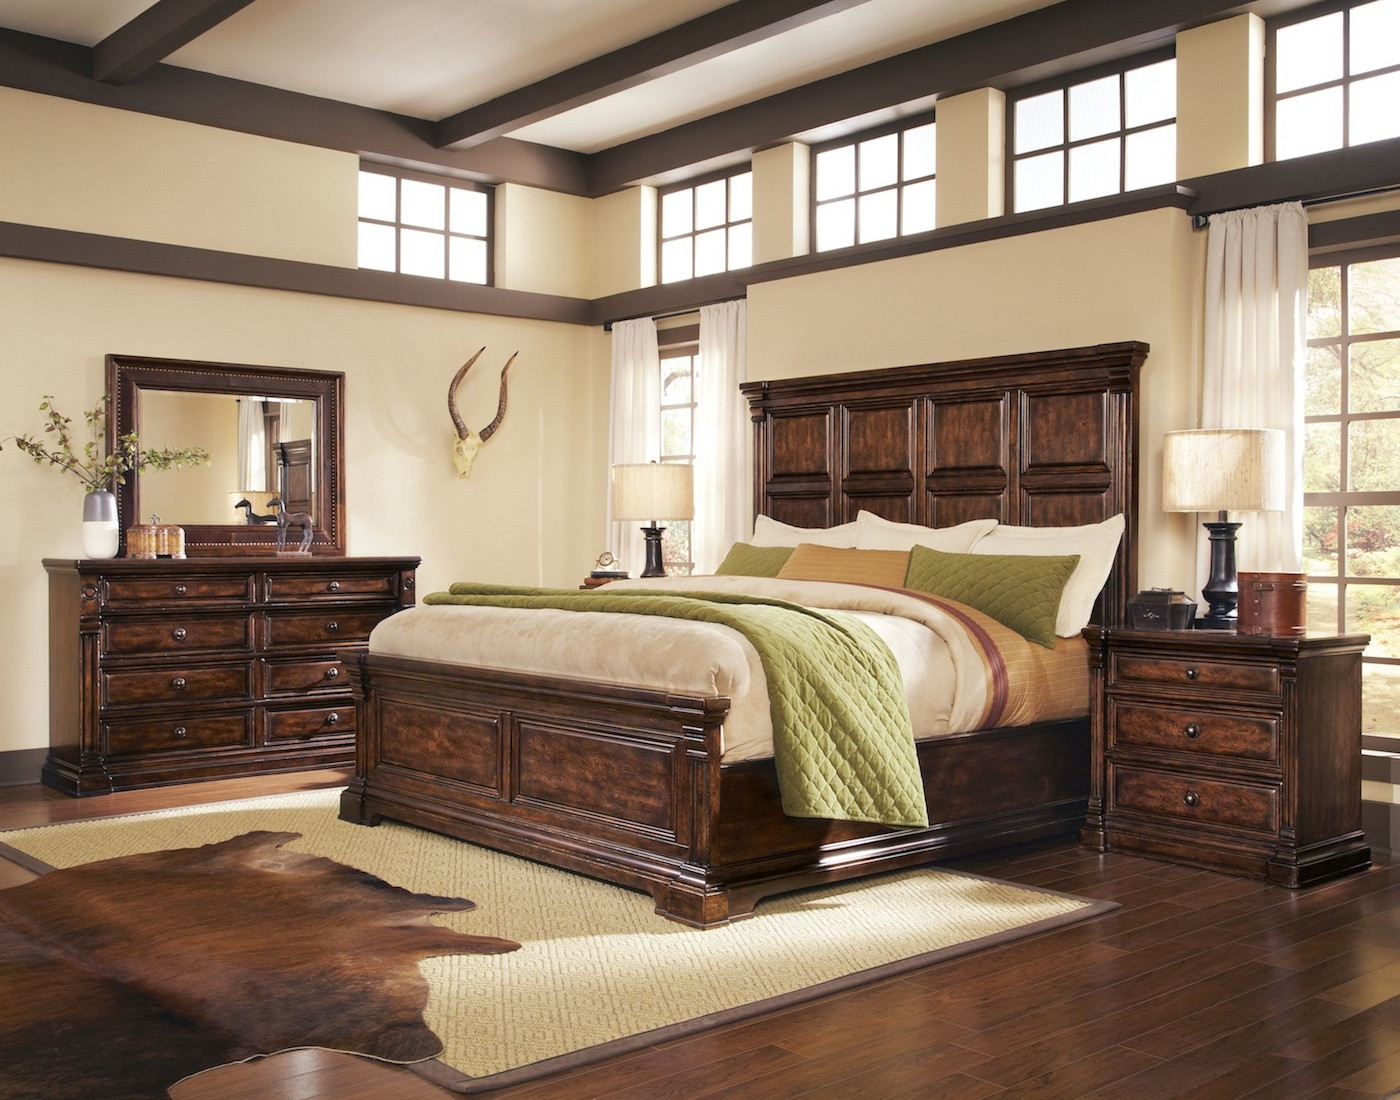 Rustic Wood Bedroom Set
 Whiskey Oak Rustic Inspired Wooden Panel Bedroom Set